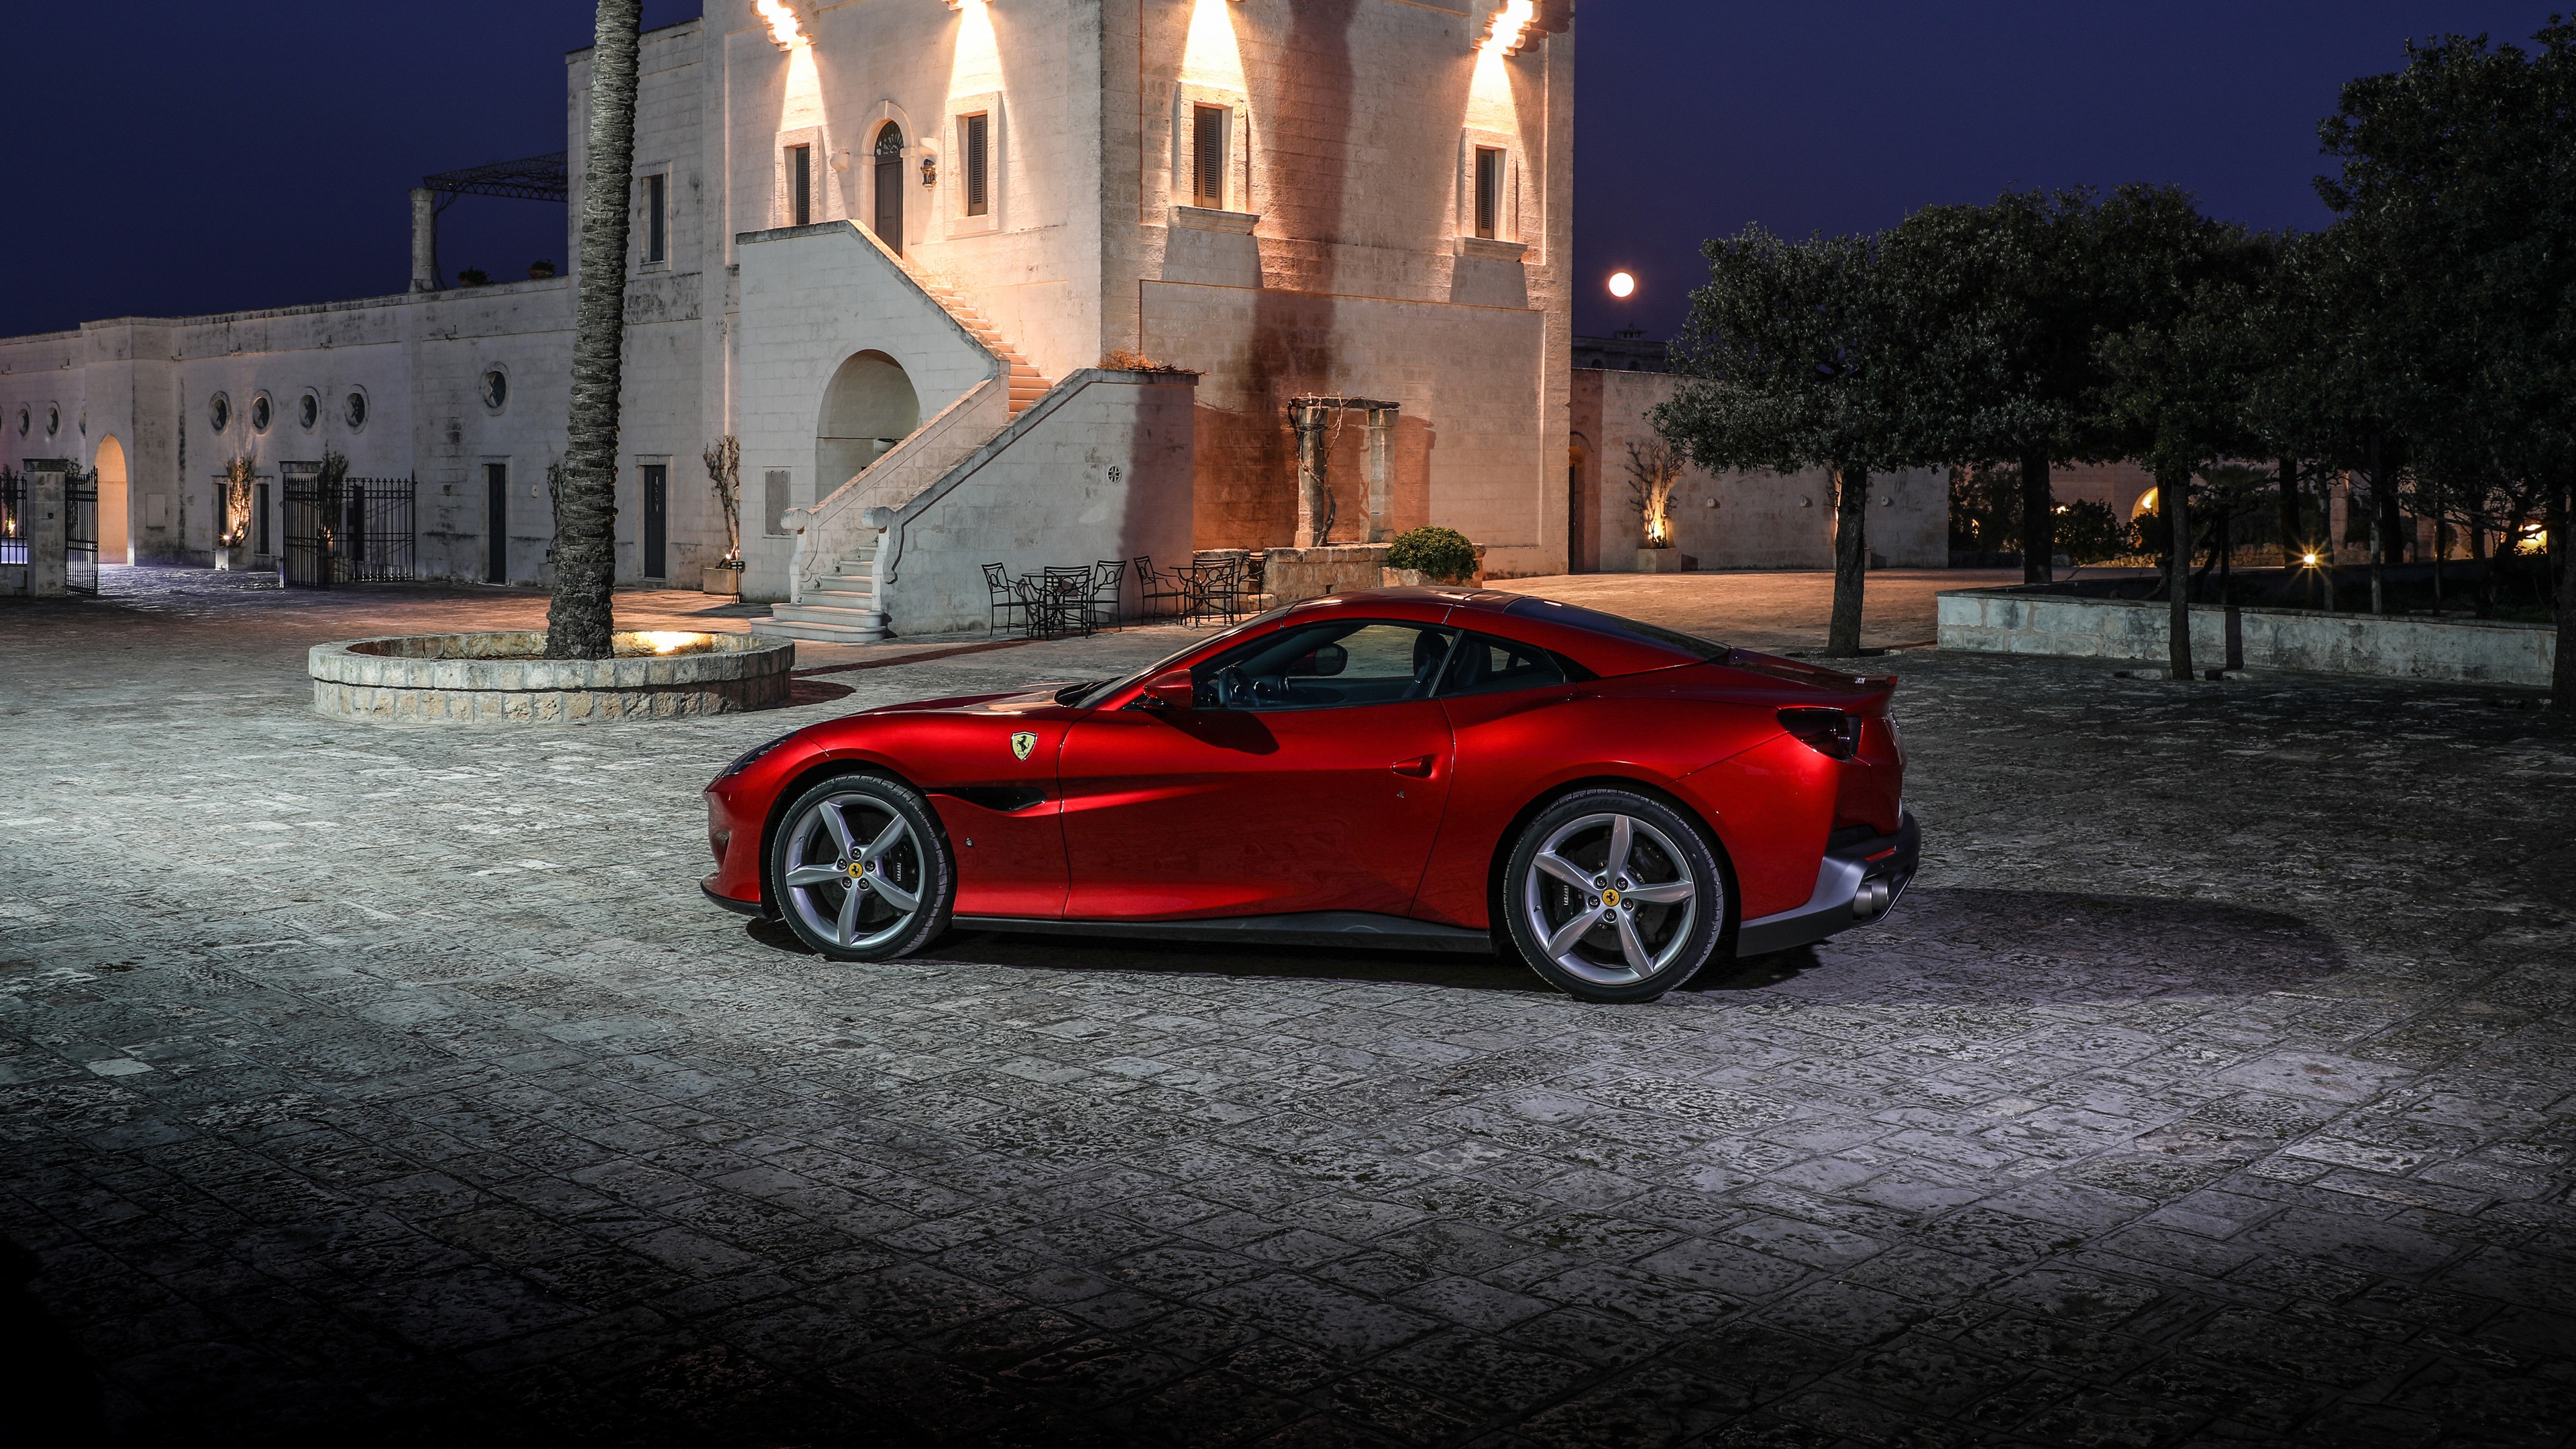 Ferrari Portofino 4k Ultra HD Wallpaper Background Image